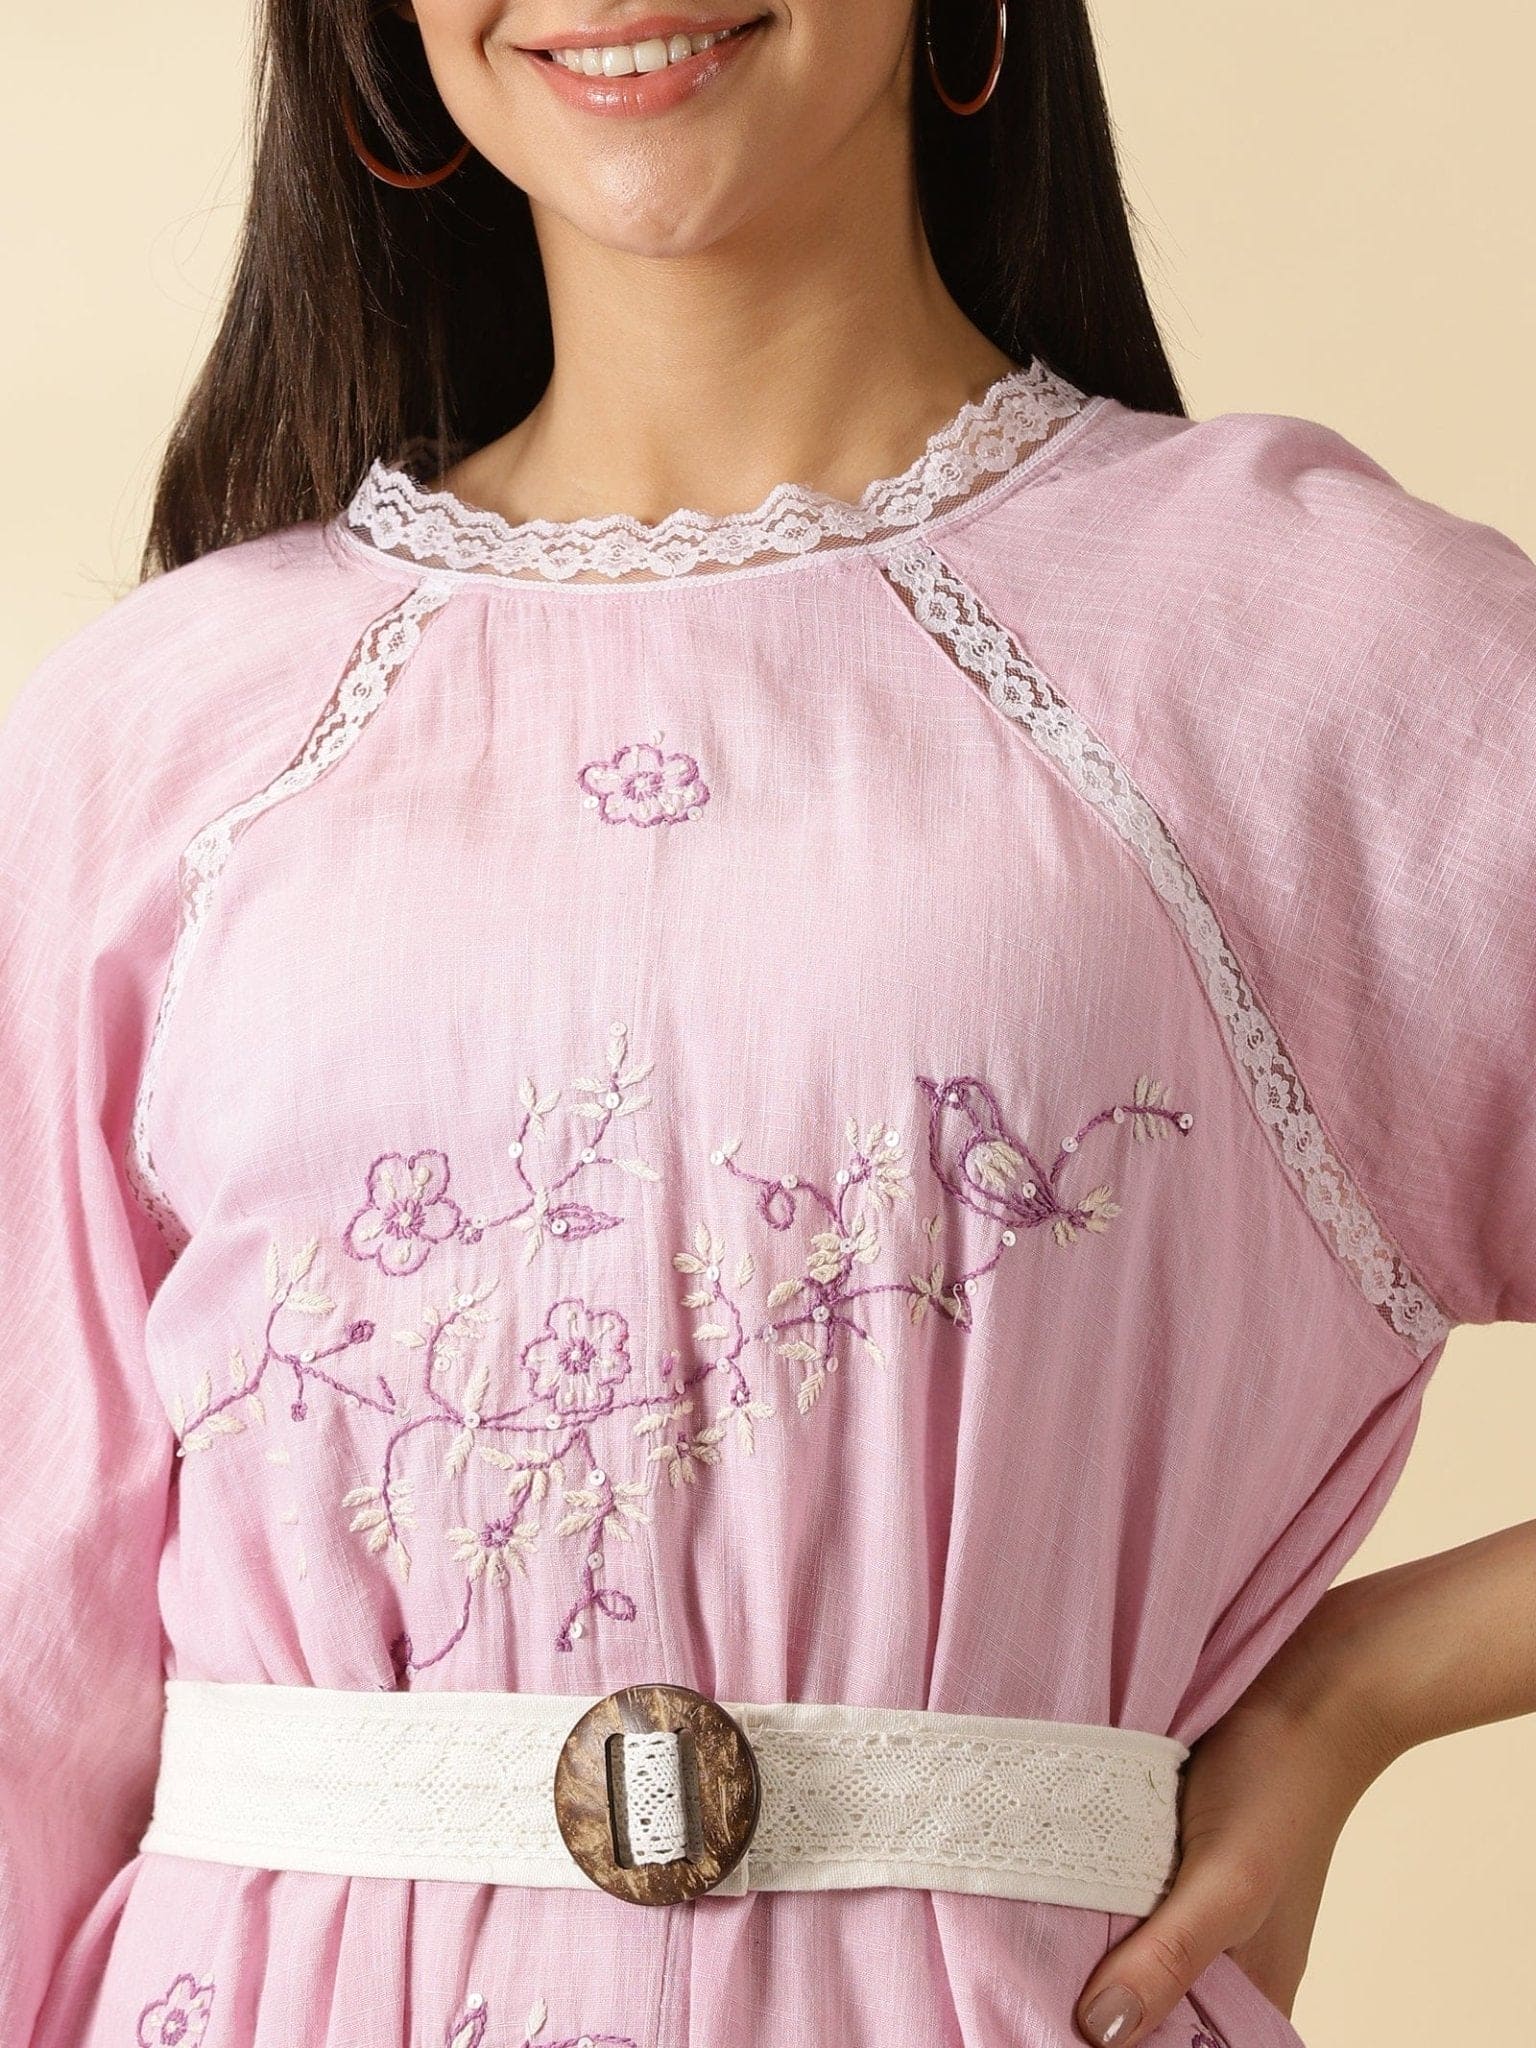 Mauve Embroidered handkercheif Dress - Charkha TalesMauve Embroidered handkercheif Dress